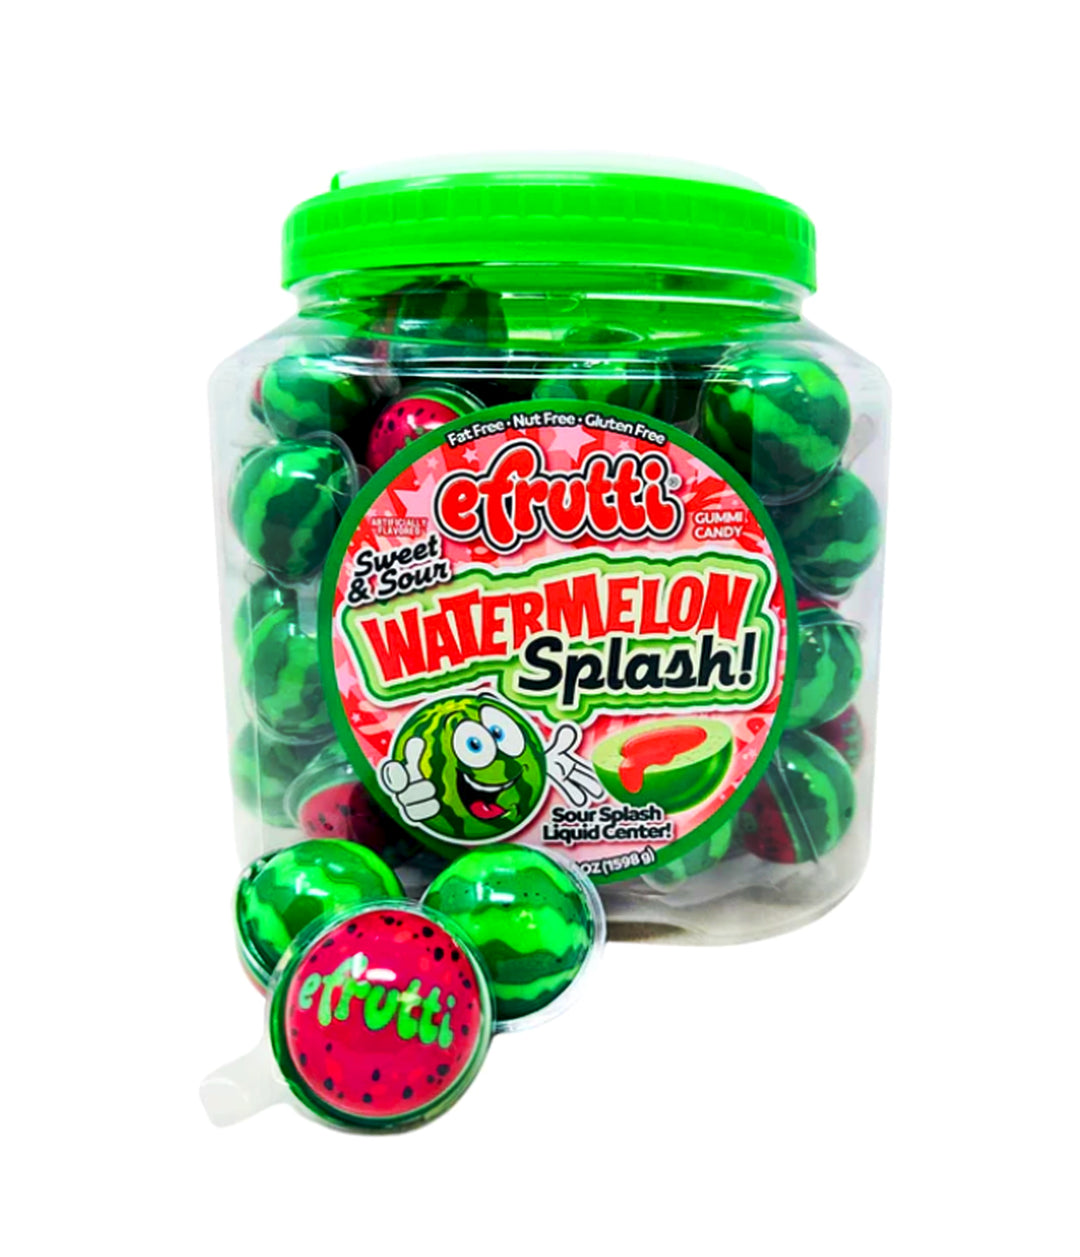 eFrutti Watermelon Splash Candy 18.5 g Snaxies Exotic Snacks Montreal Quebec Canada